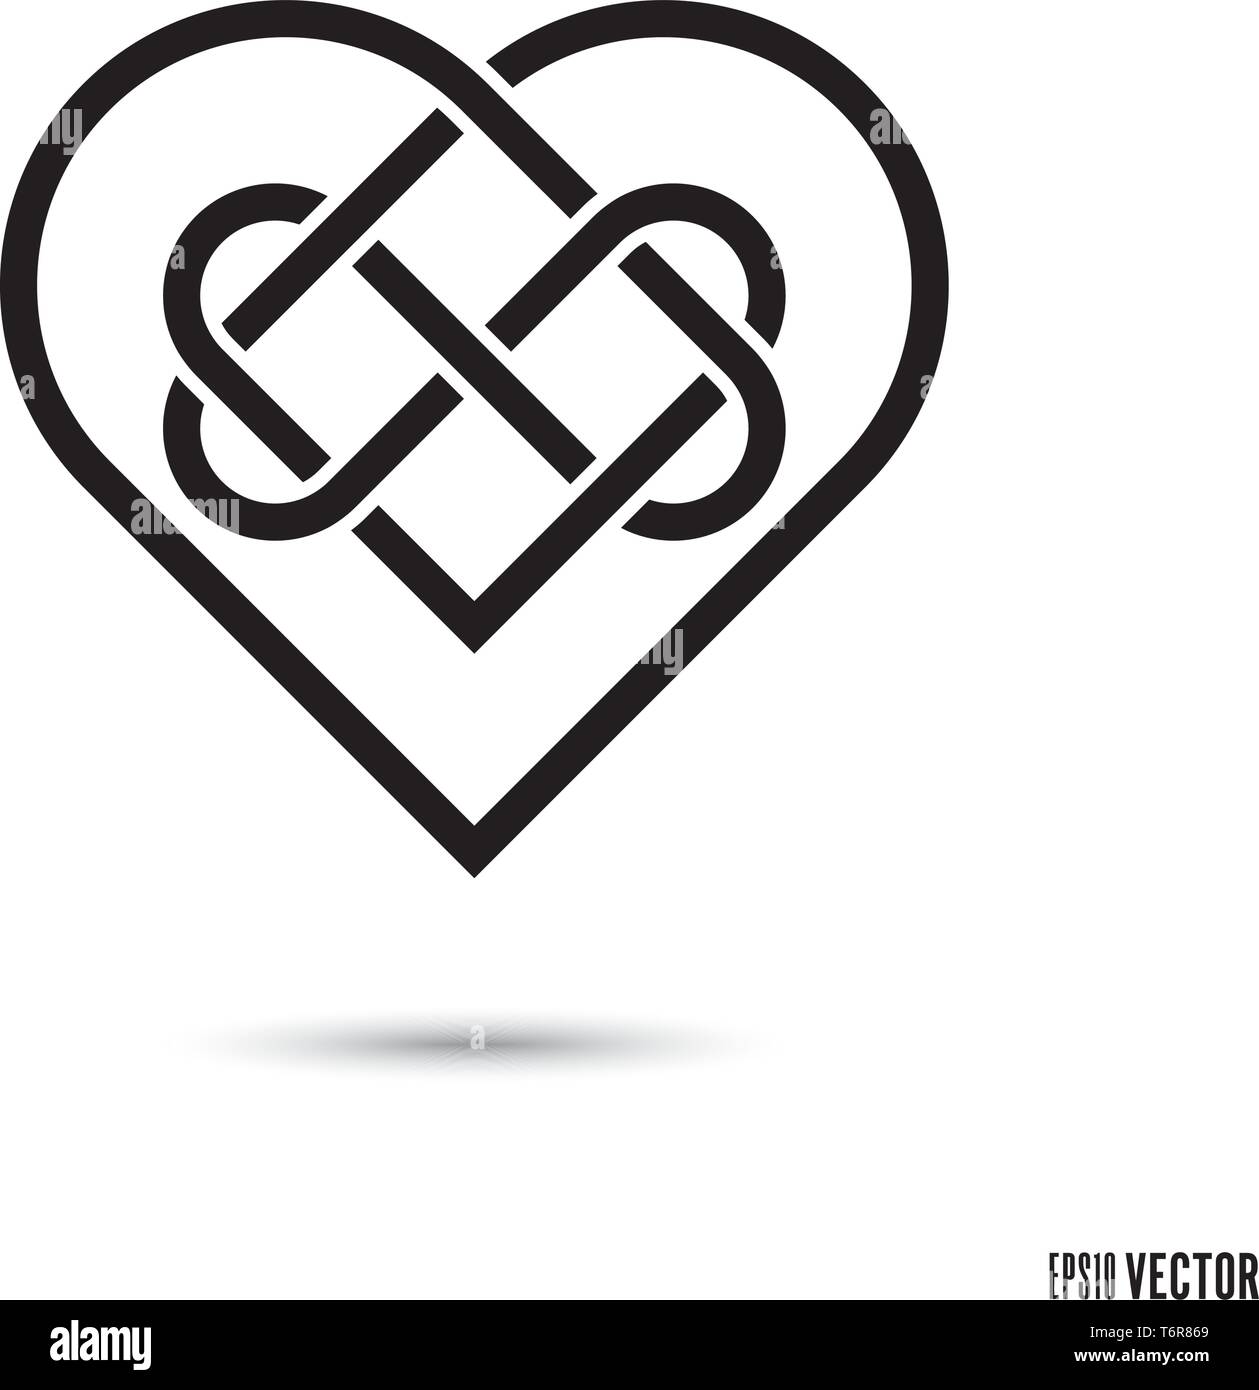 Celtic love Knot, verflochten unendliche Band Schablone symbol Vektor illustration Stock Vektor